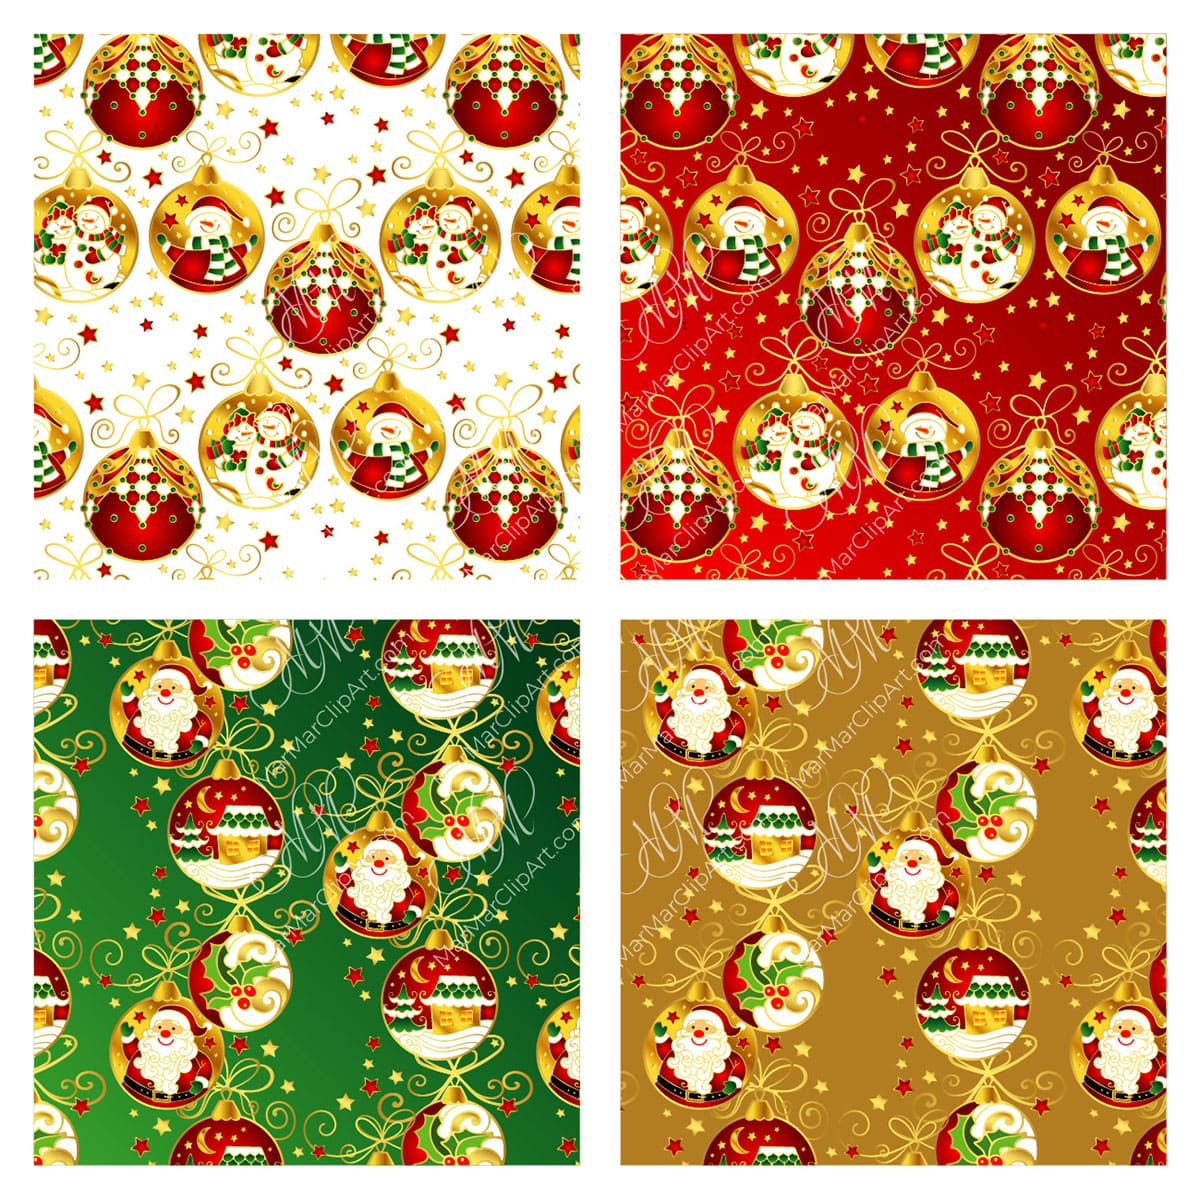 Seamless vector patterns: Christmas balls